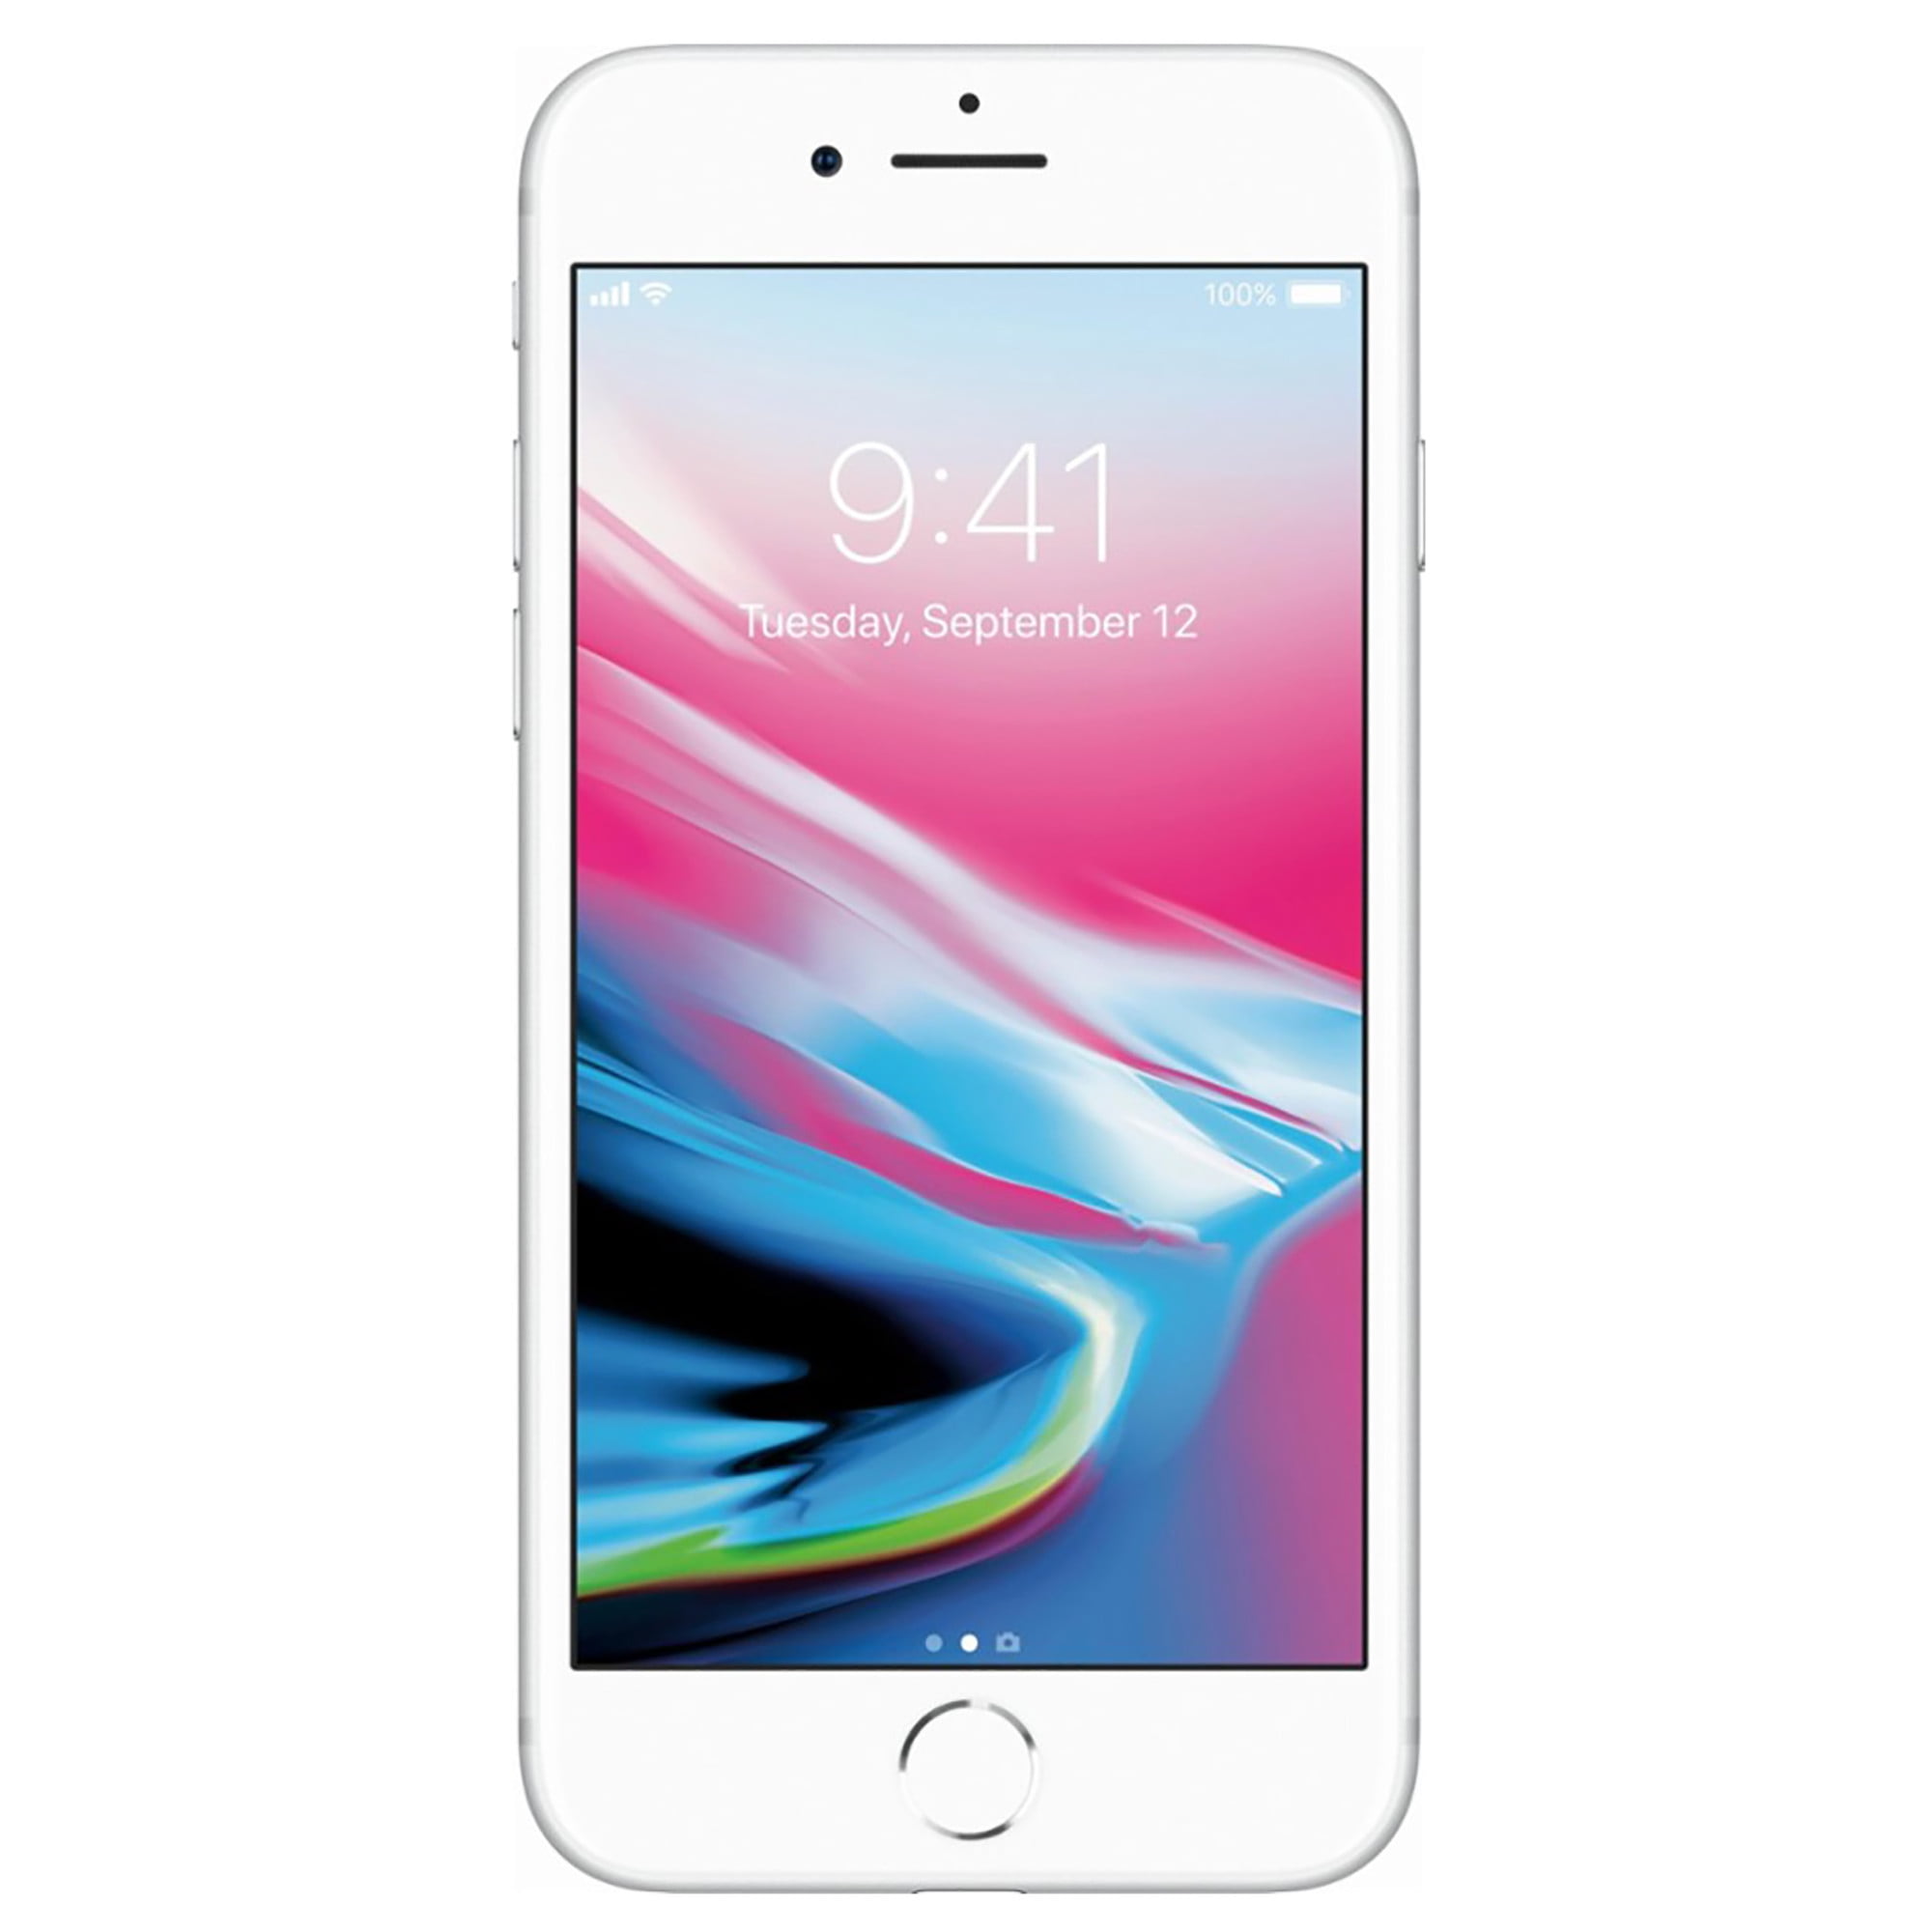 Apple iPhone 8 256GB Unlocked GSM Phone w/ 12MP Camera - Silver (Used)